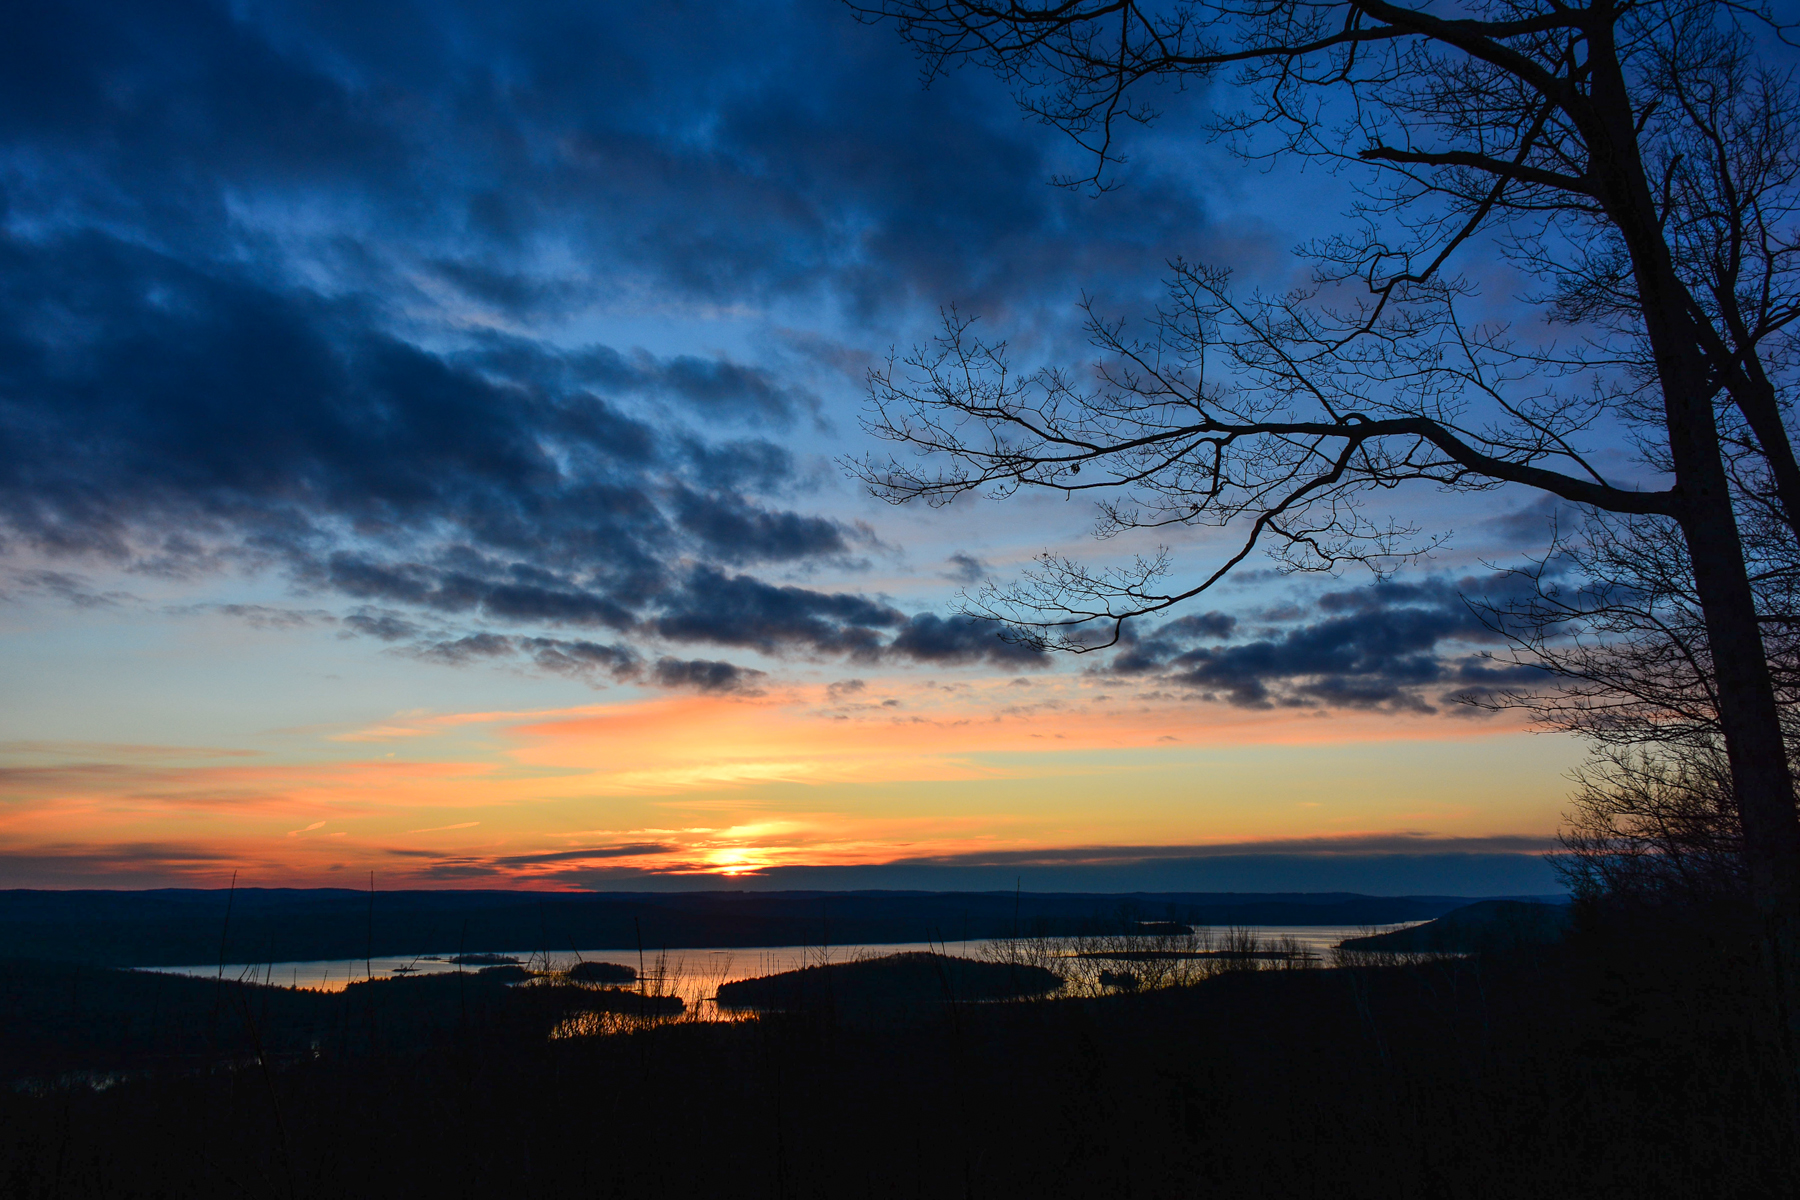   Sunrise, New Salem Lookout, December 31st, 2014.&nbsp;  